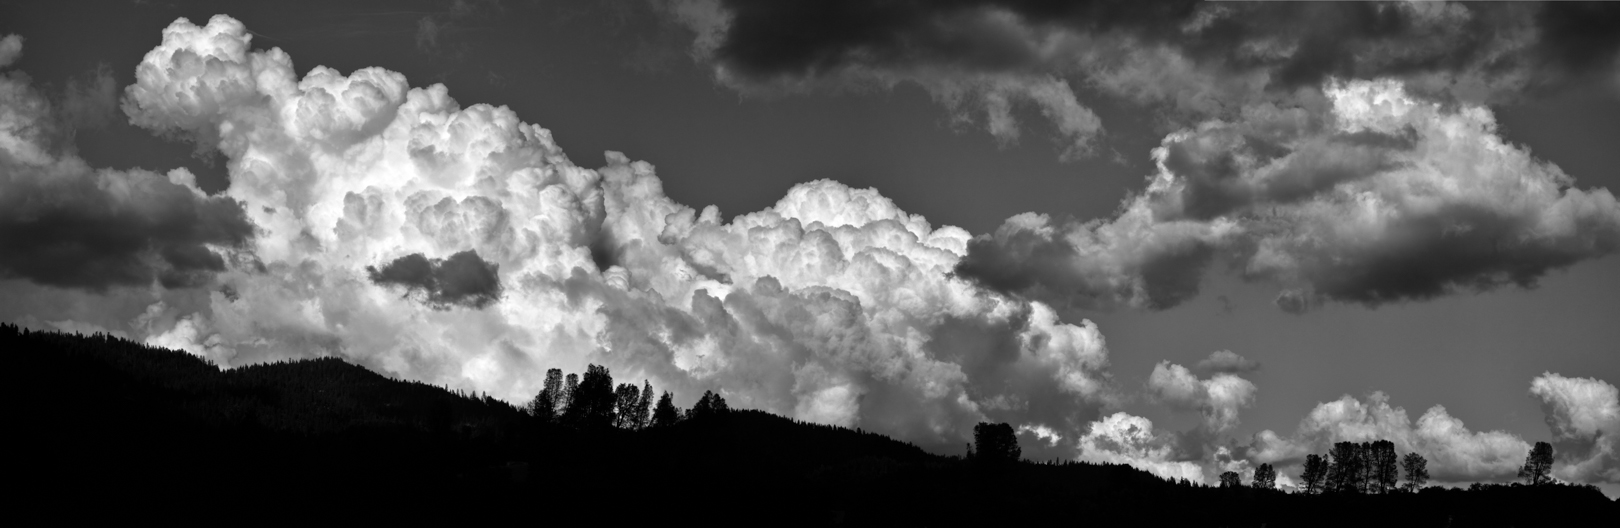 October Clouds-11.jpg